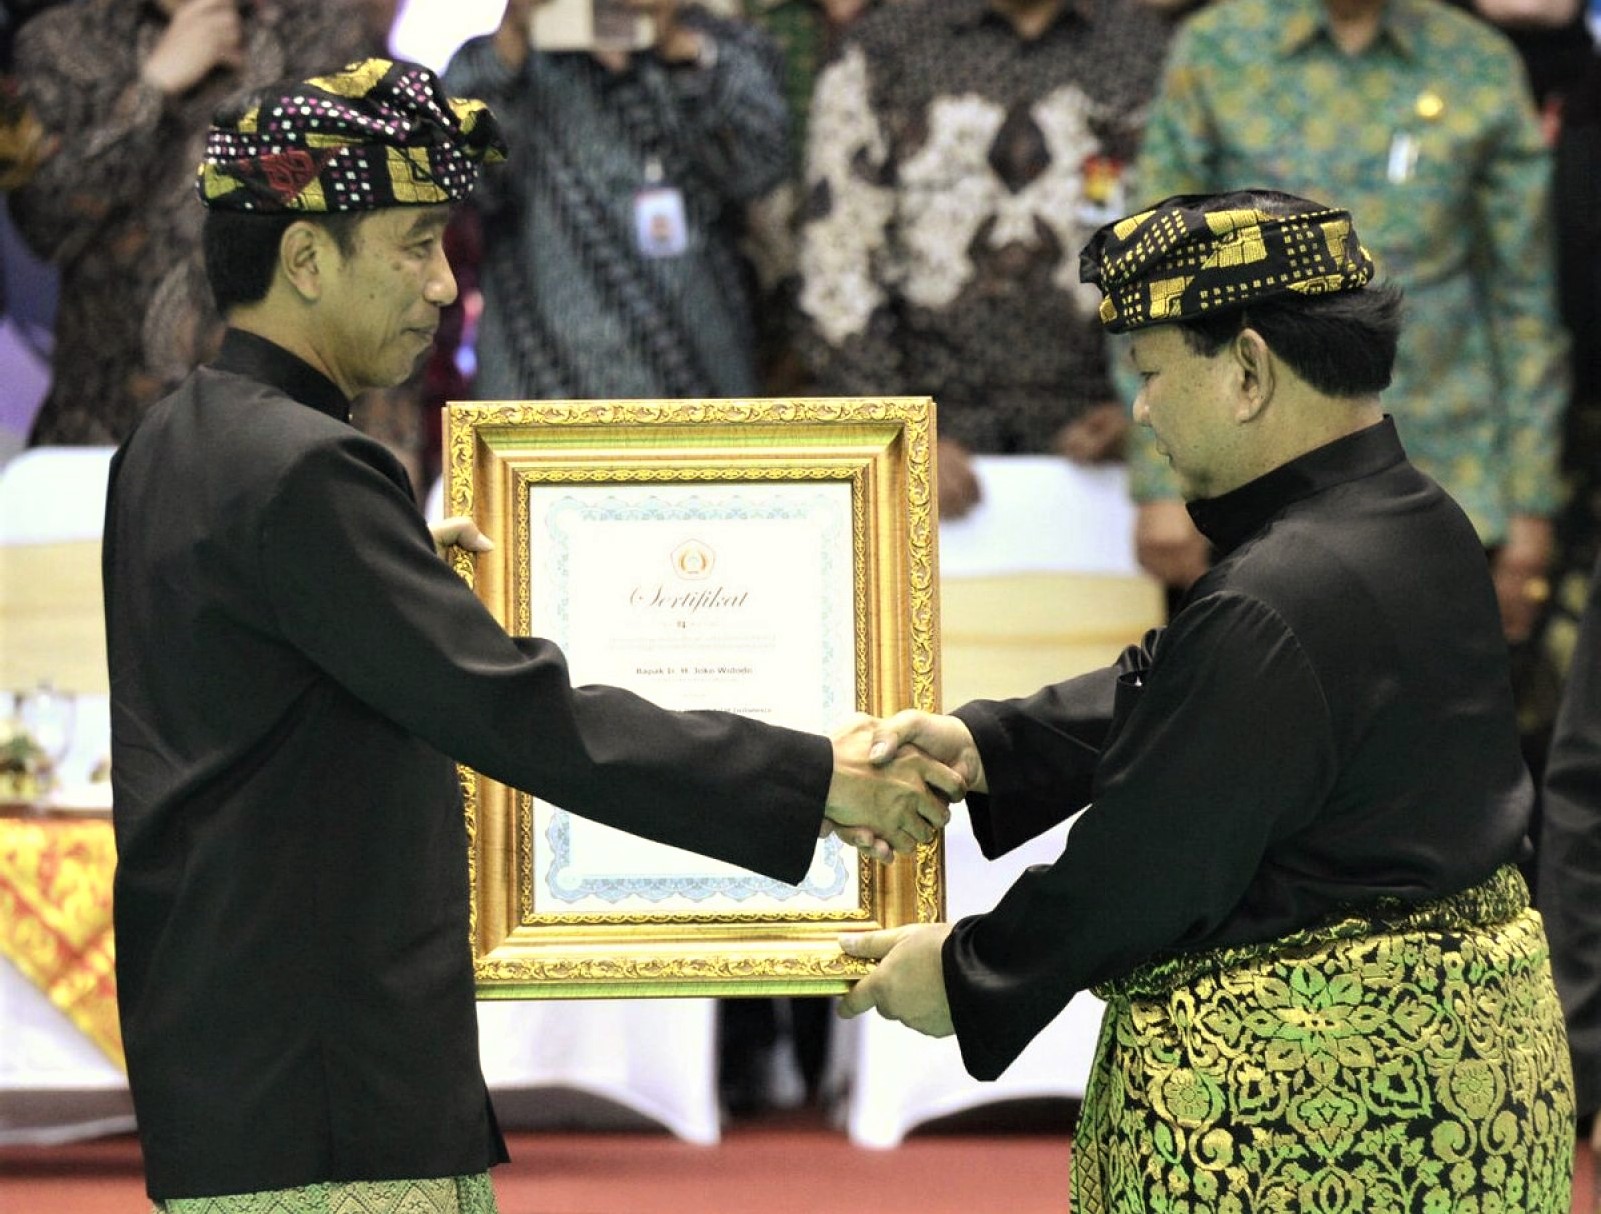  President Jokowi receiving Pendekar Honour from President of Persilat at Pencak Silat World Championships, Bali Indonesia 2016